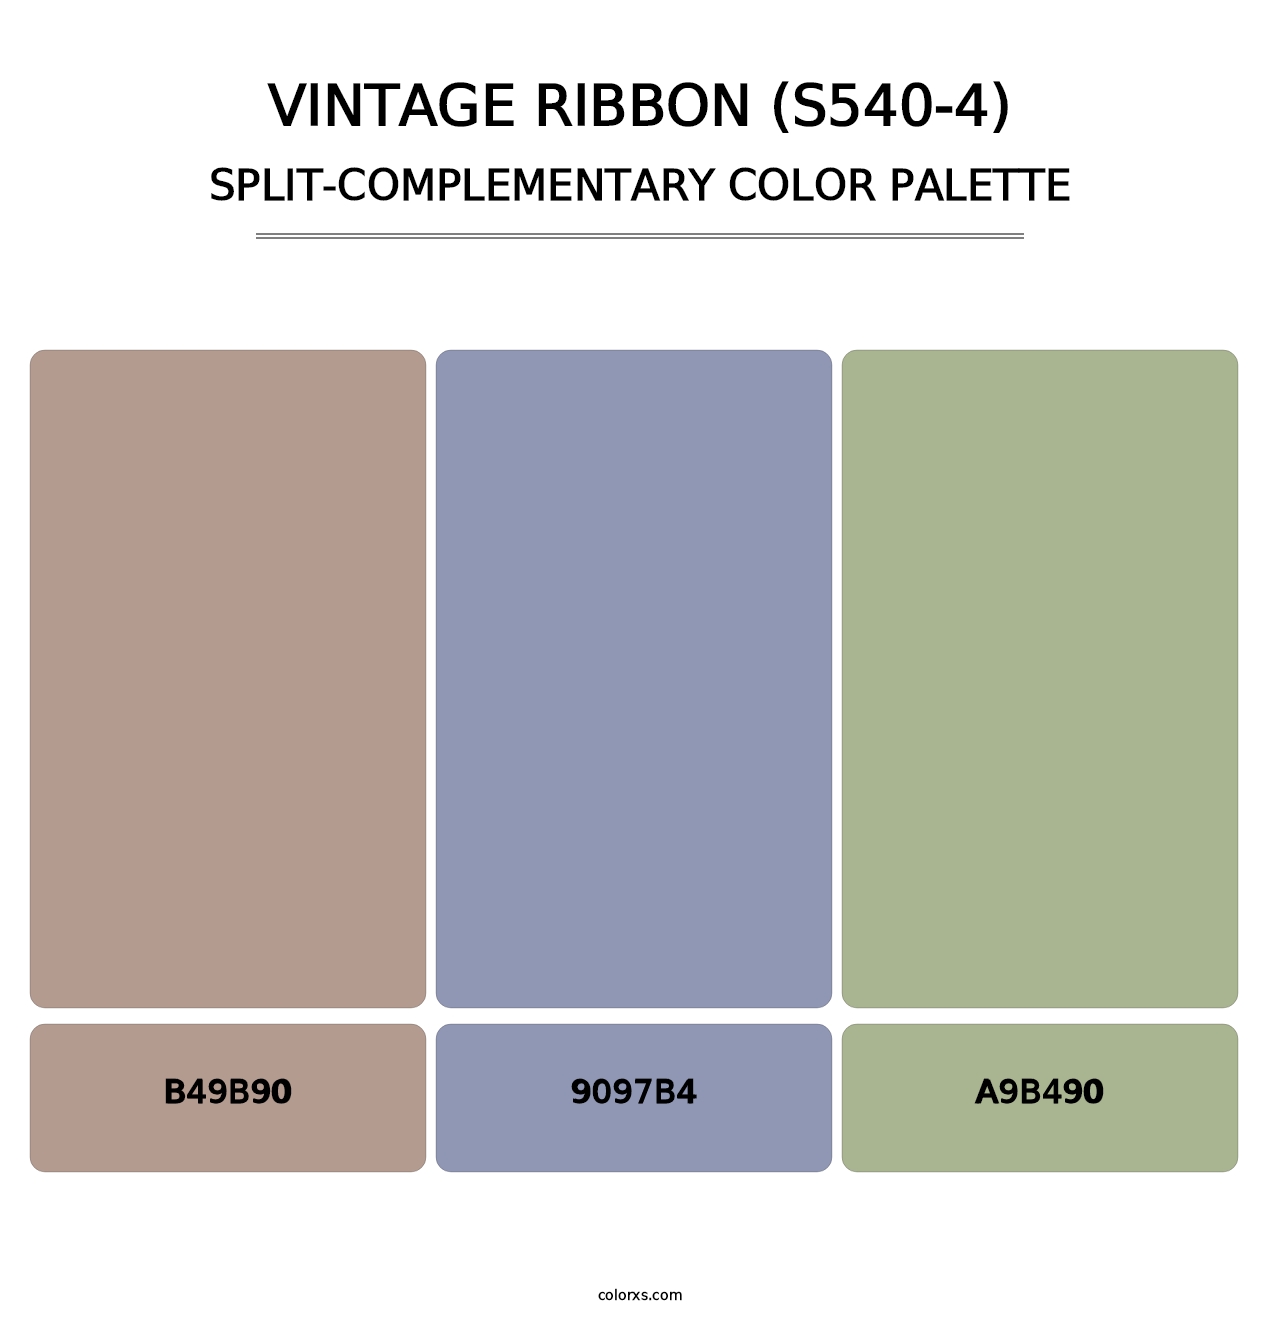 Vintage Ribbon (S540-4) - Split-Complementary Color Palette